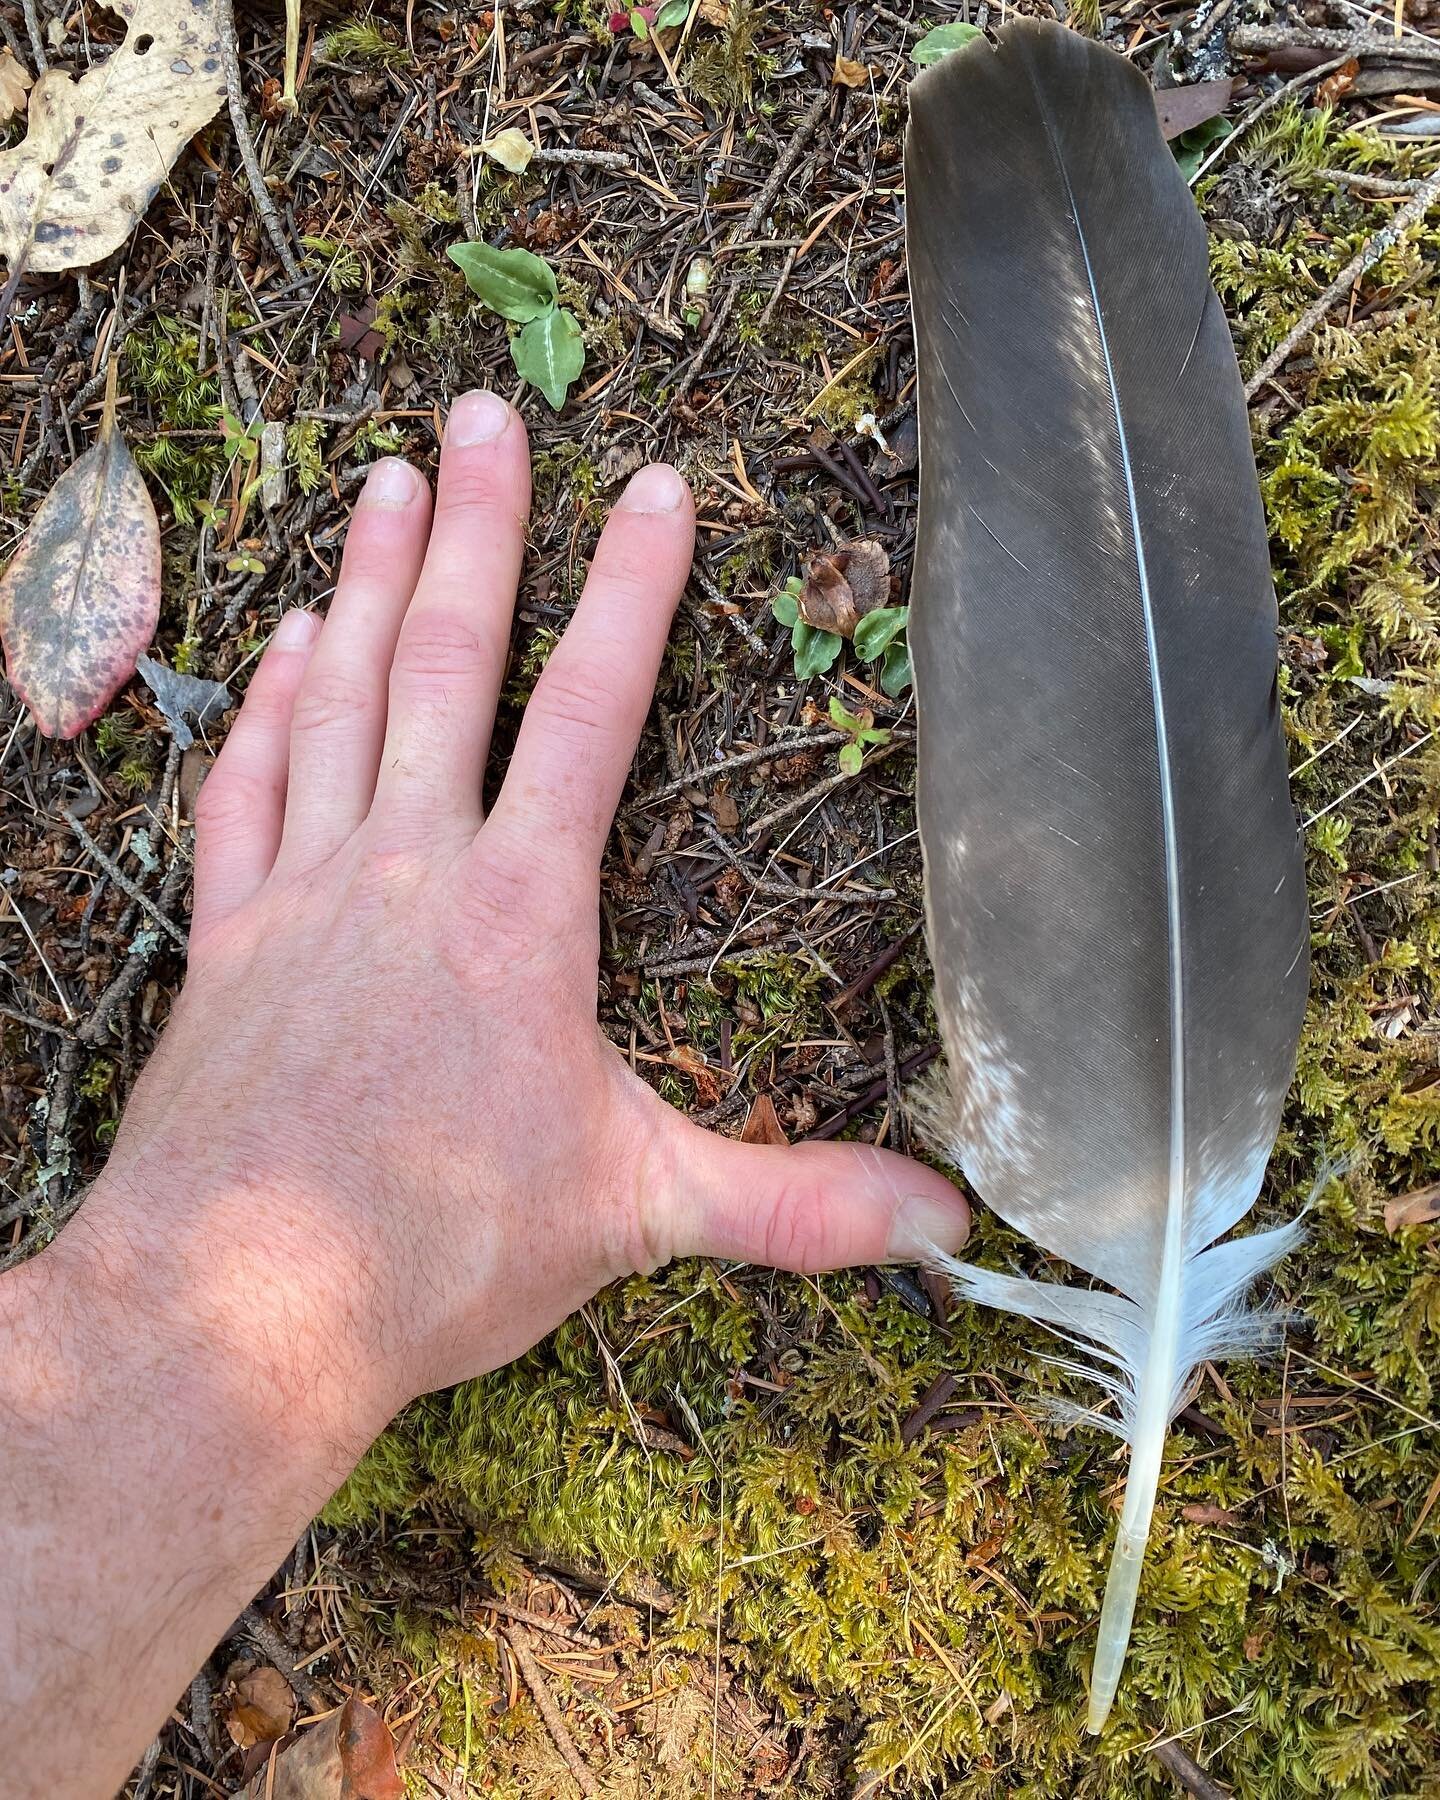 Awesome Eagle feather found by @ari.sahagun on Orcas Island.
.
.
.
.
.
.
.
#birding #naturalist #featherid #wildlife #wildlifephotography #wildlifetracking #animaltracking #nature #birdnerd #outdoors #exploration #hiking #pnw #washingtonstate #birdin